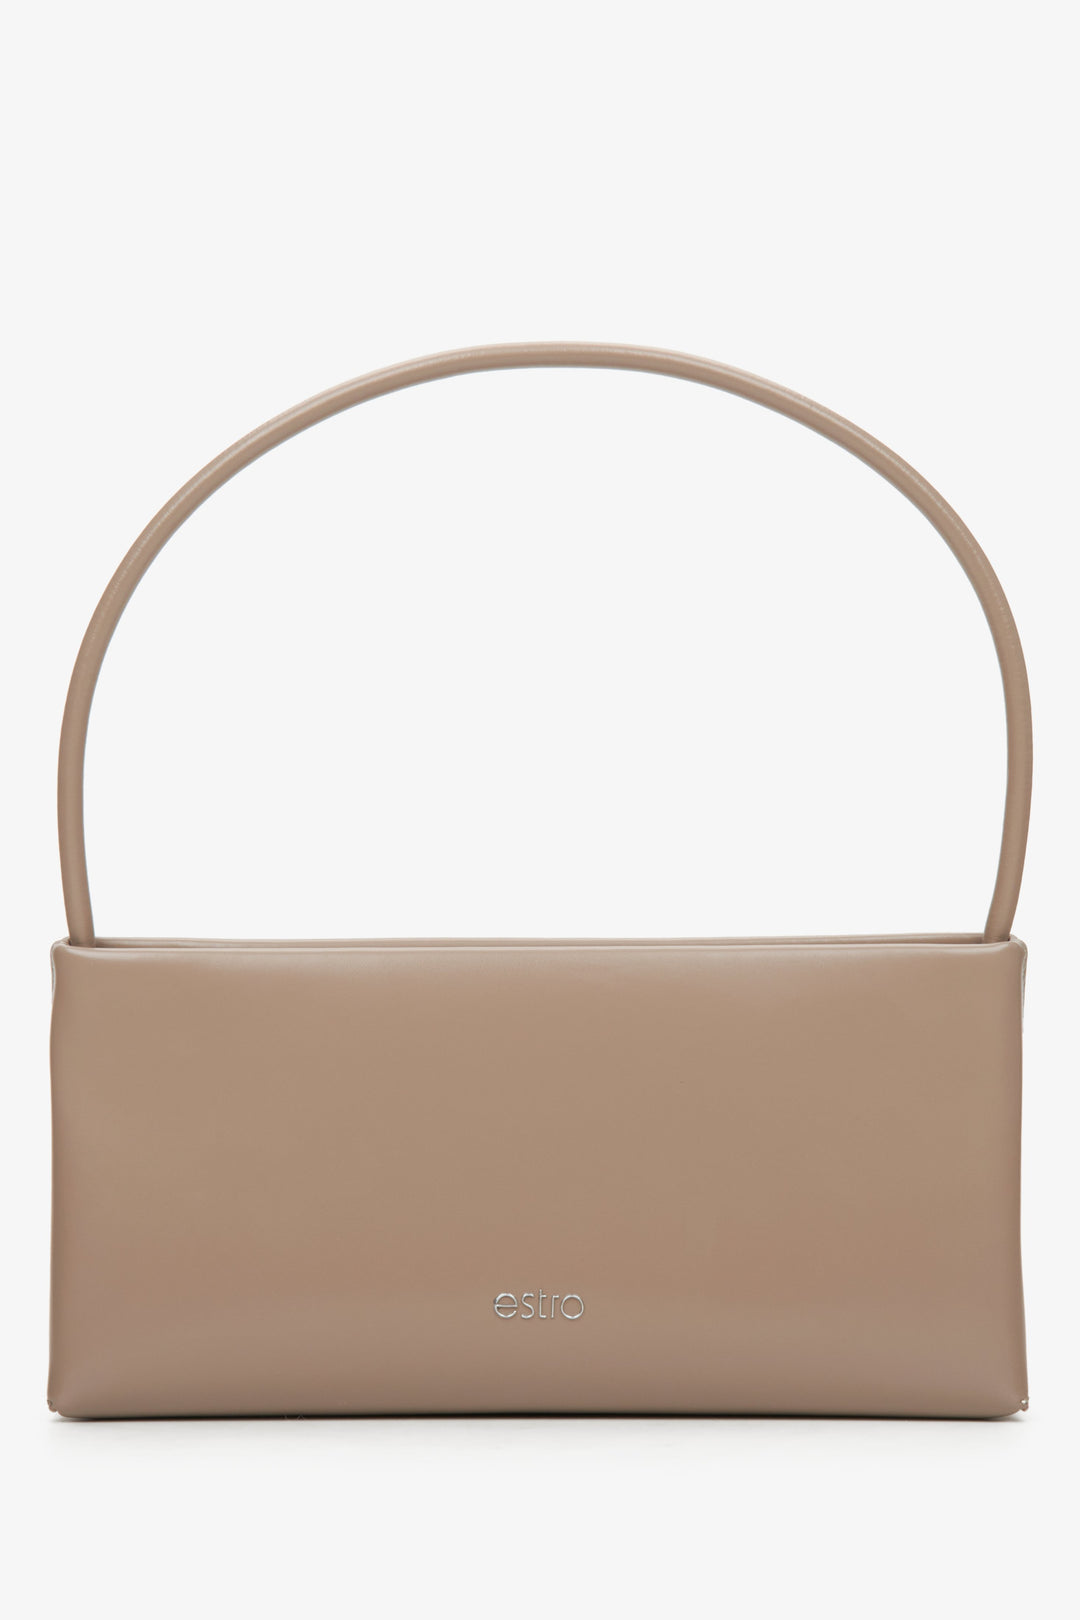 Women's sand beige leather handbag.